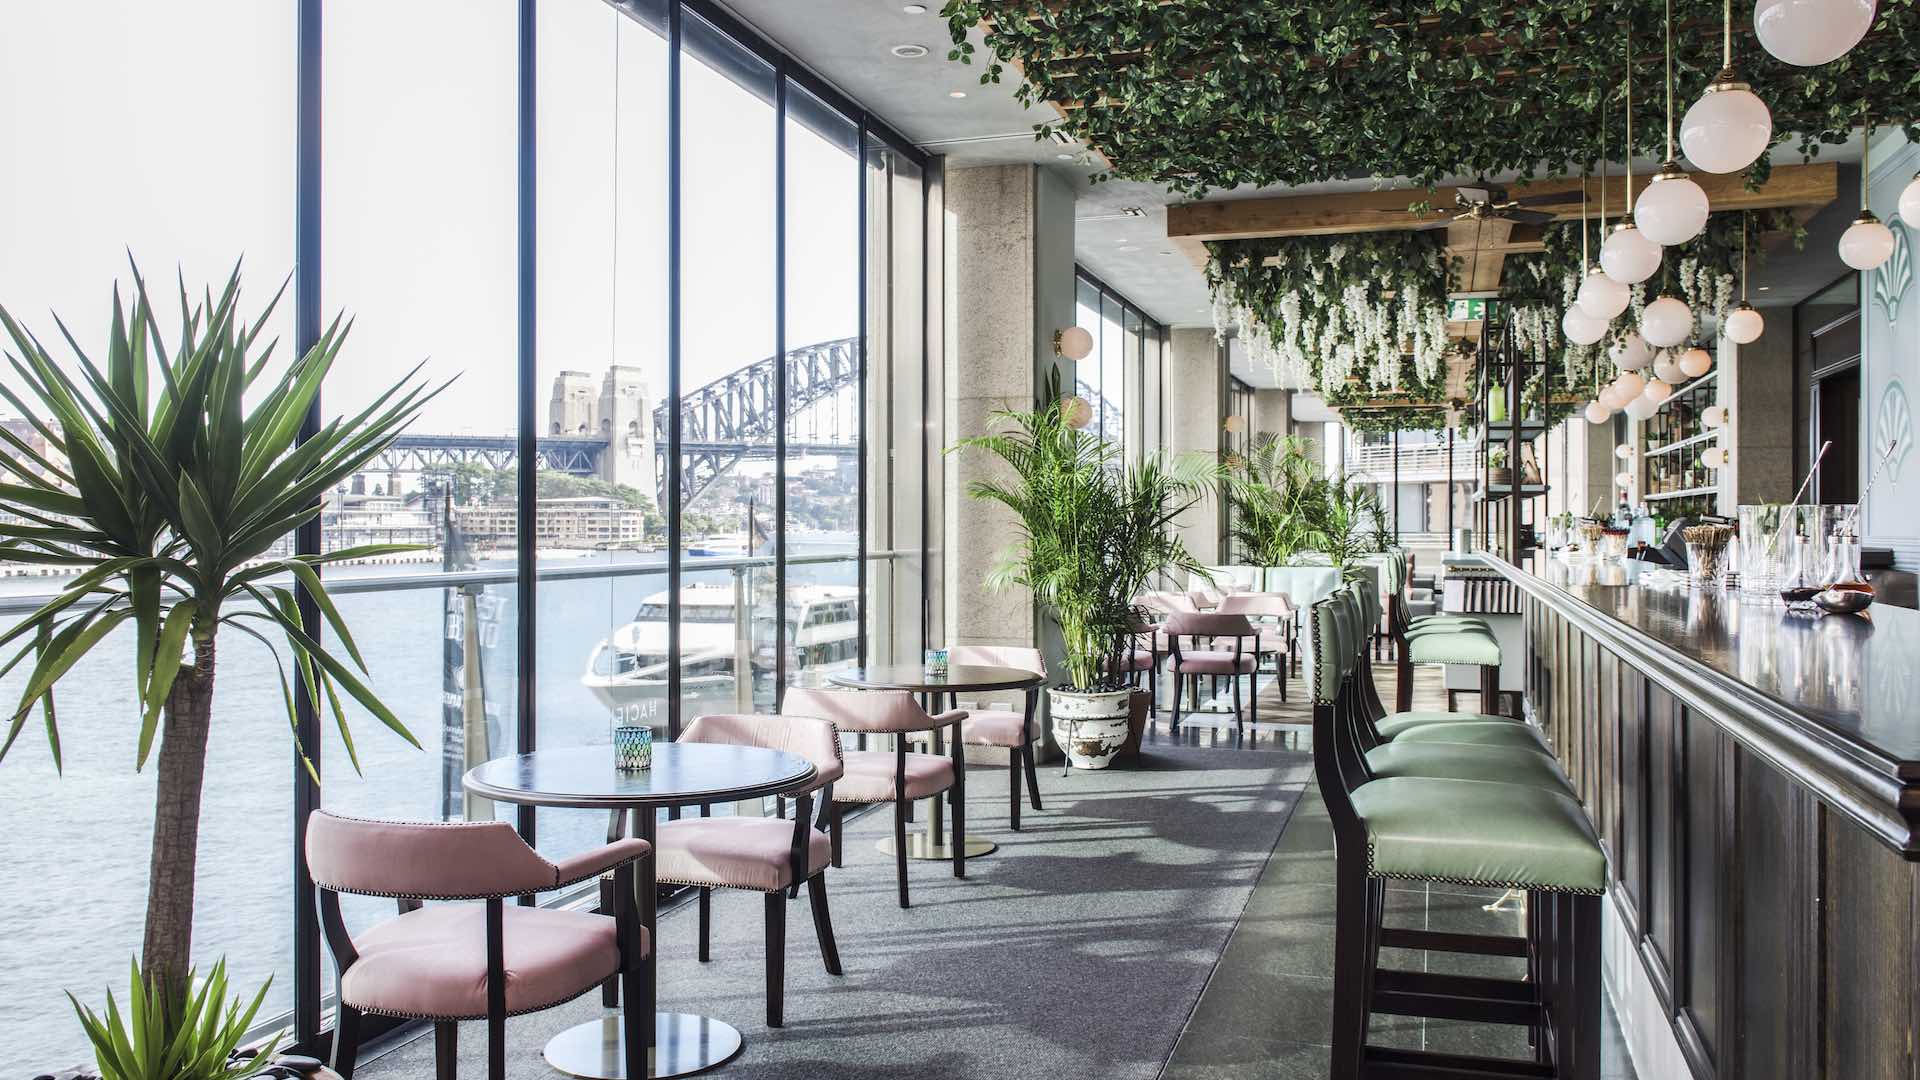 Hacienda bar with views over Circular Quay in Sydney